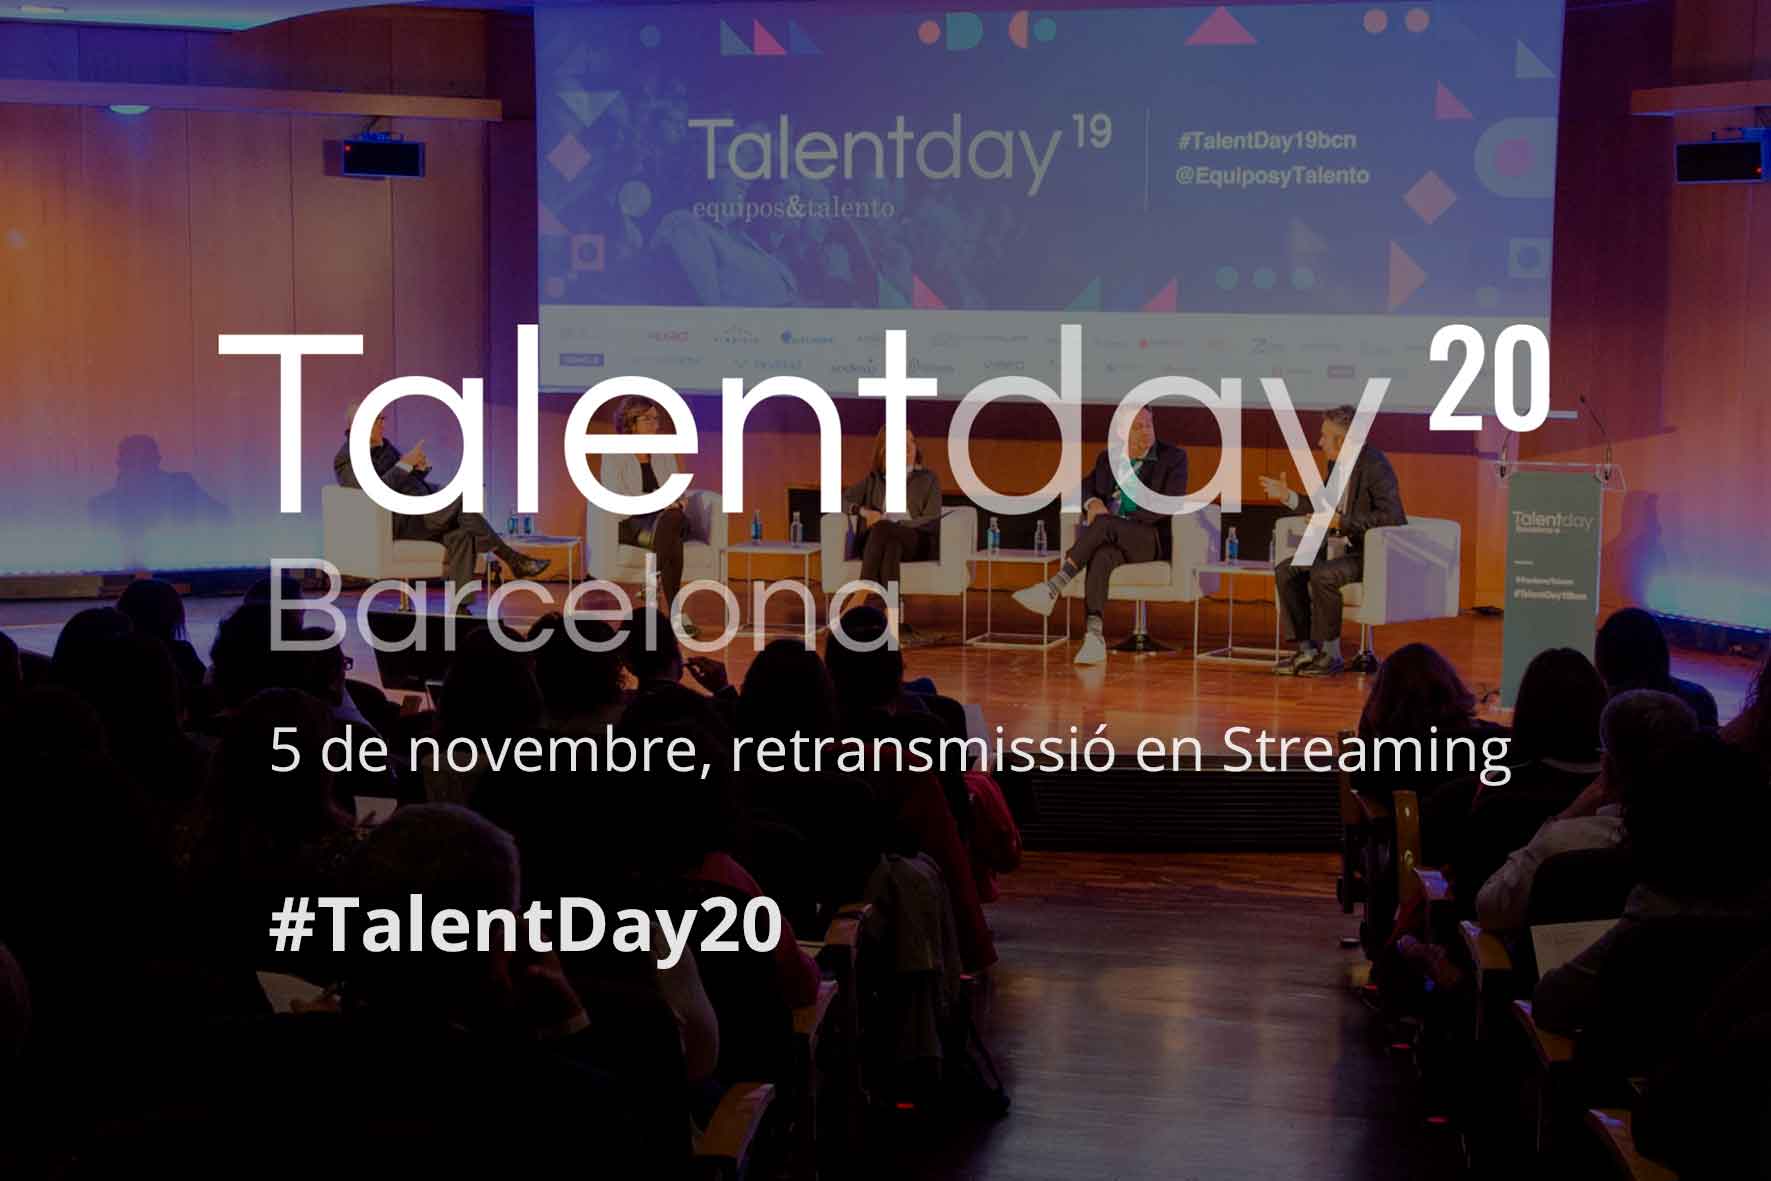 Participarem en el Talent Day Barcelona 2020: Reconnecting People & Reinventing Organizations